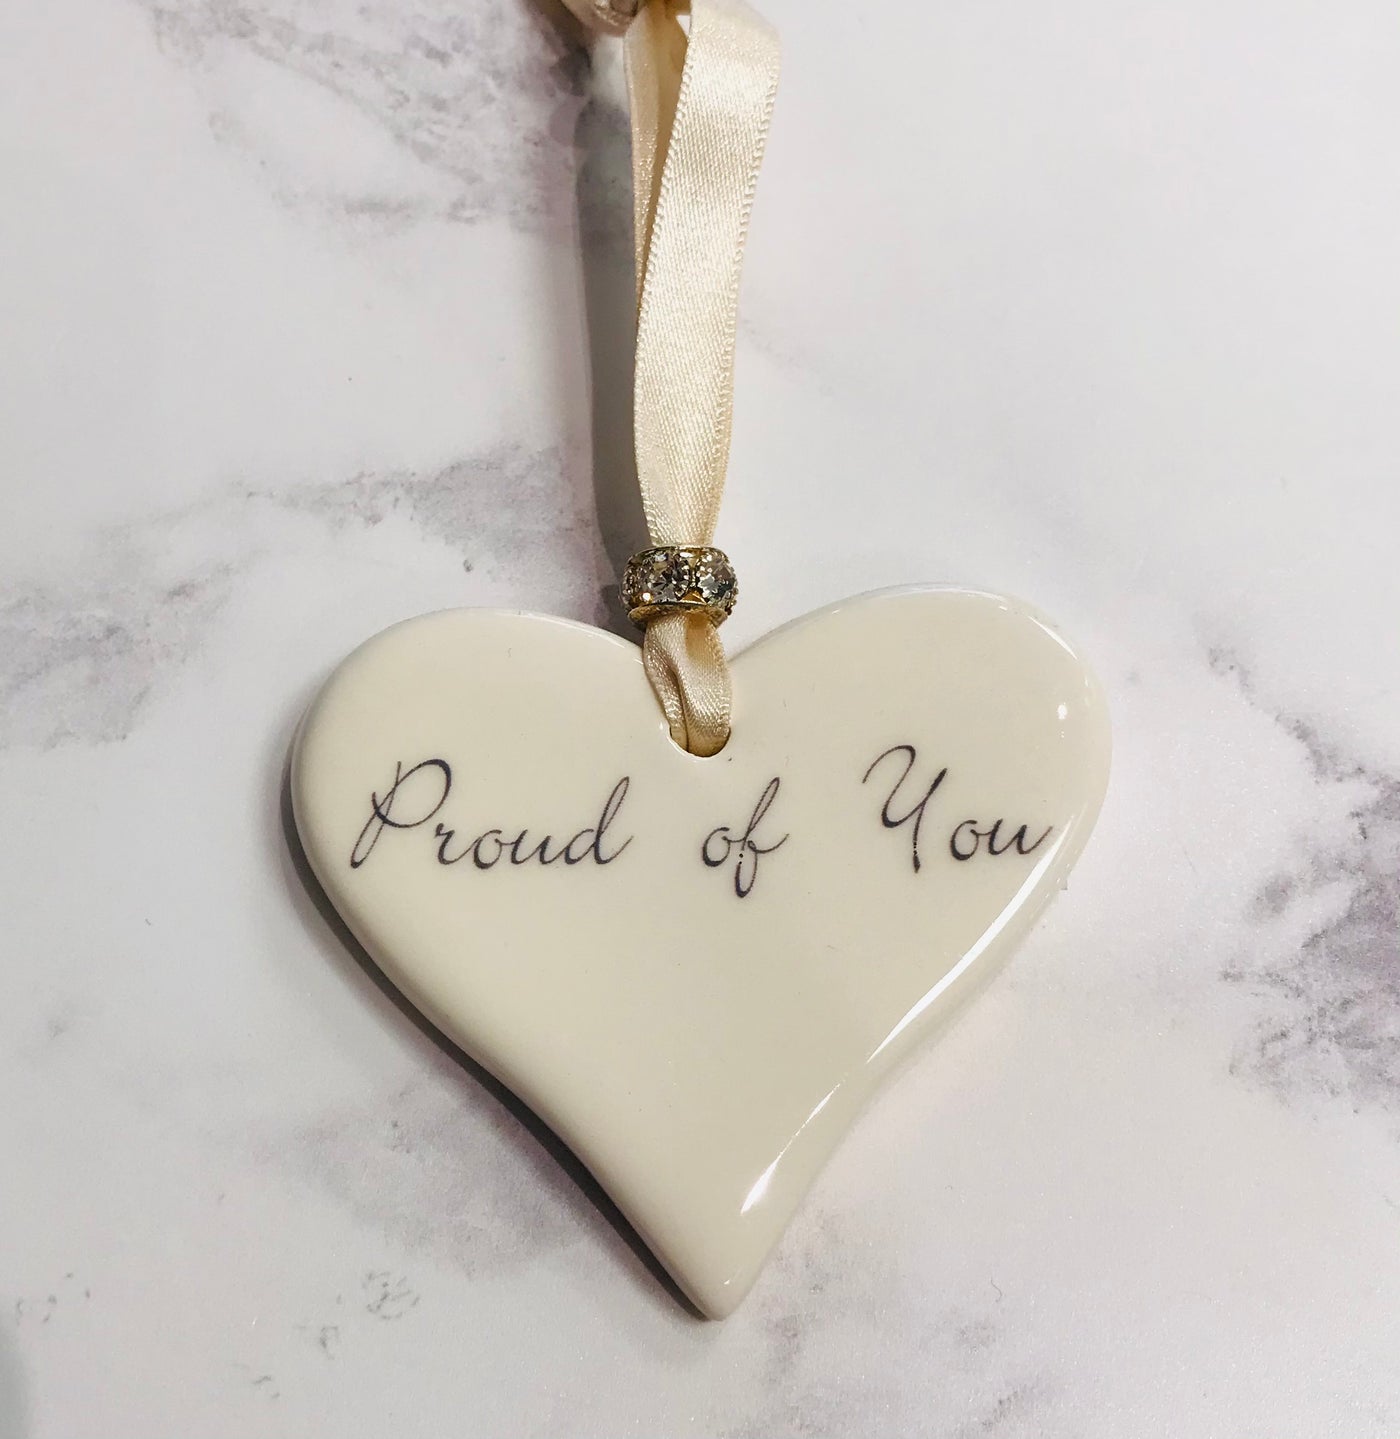 Dimbleby Ceramics Sentiment Hanging Heart - Proud of You